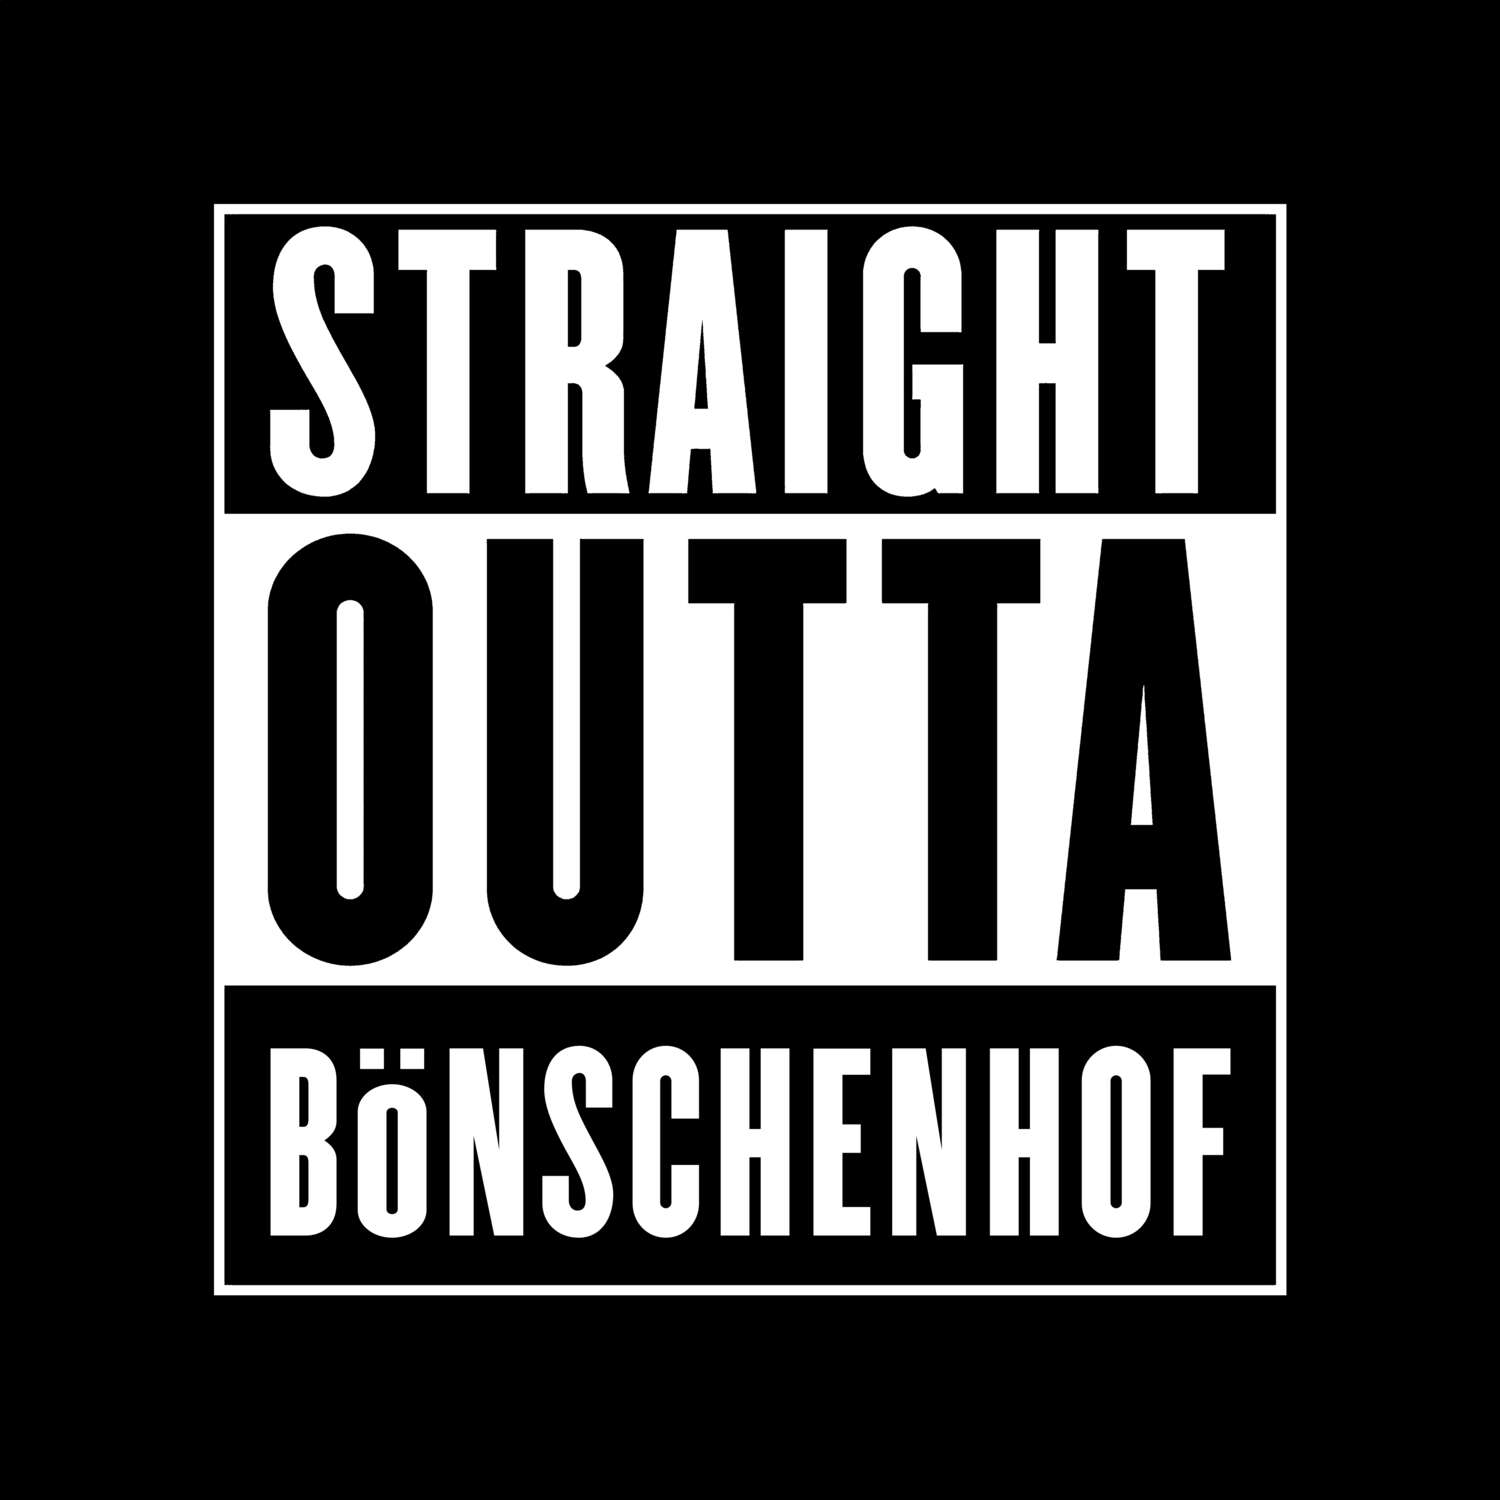 Bönschenhof T-Shirt »Straight Outta«